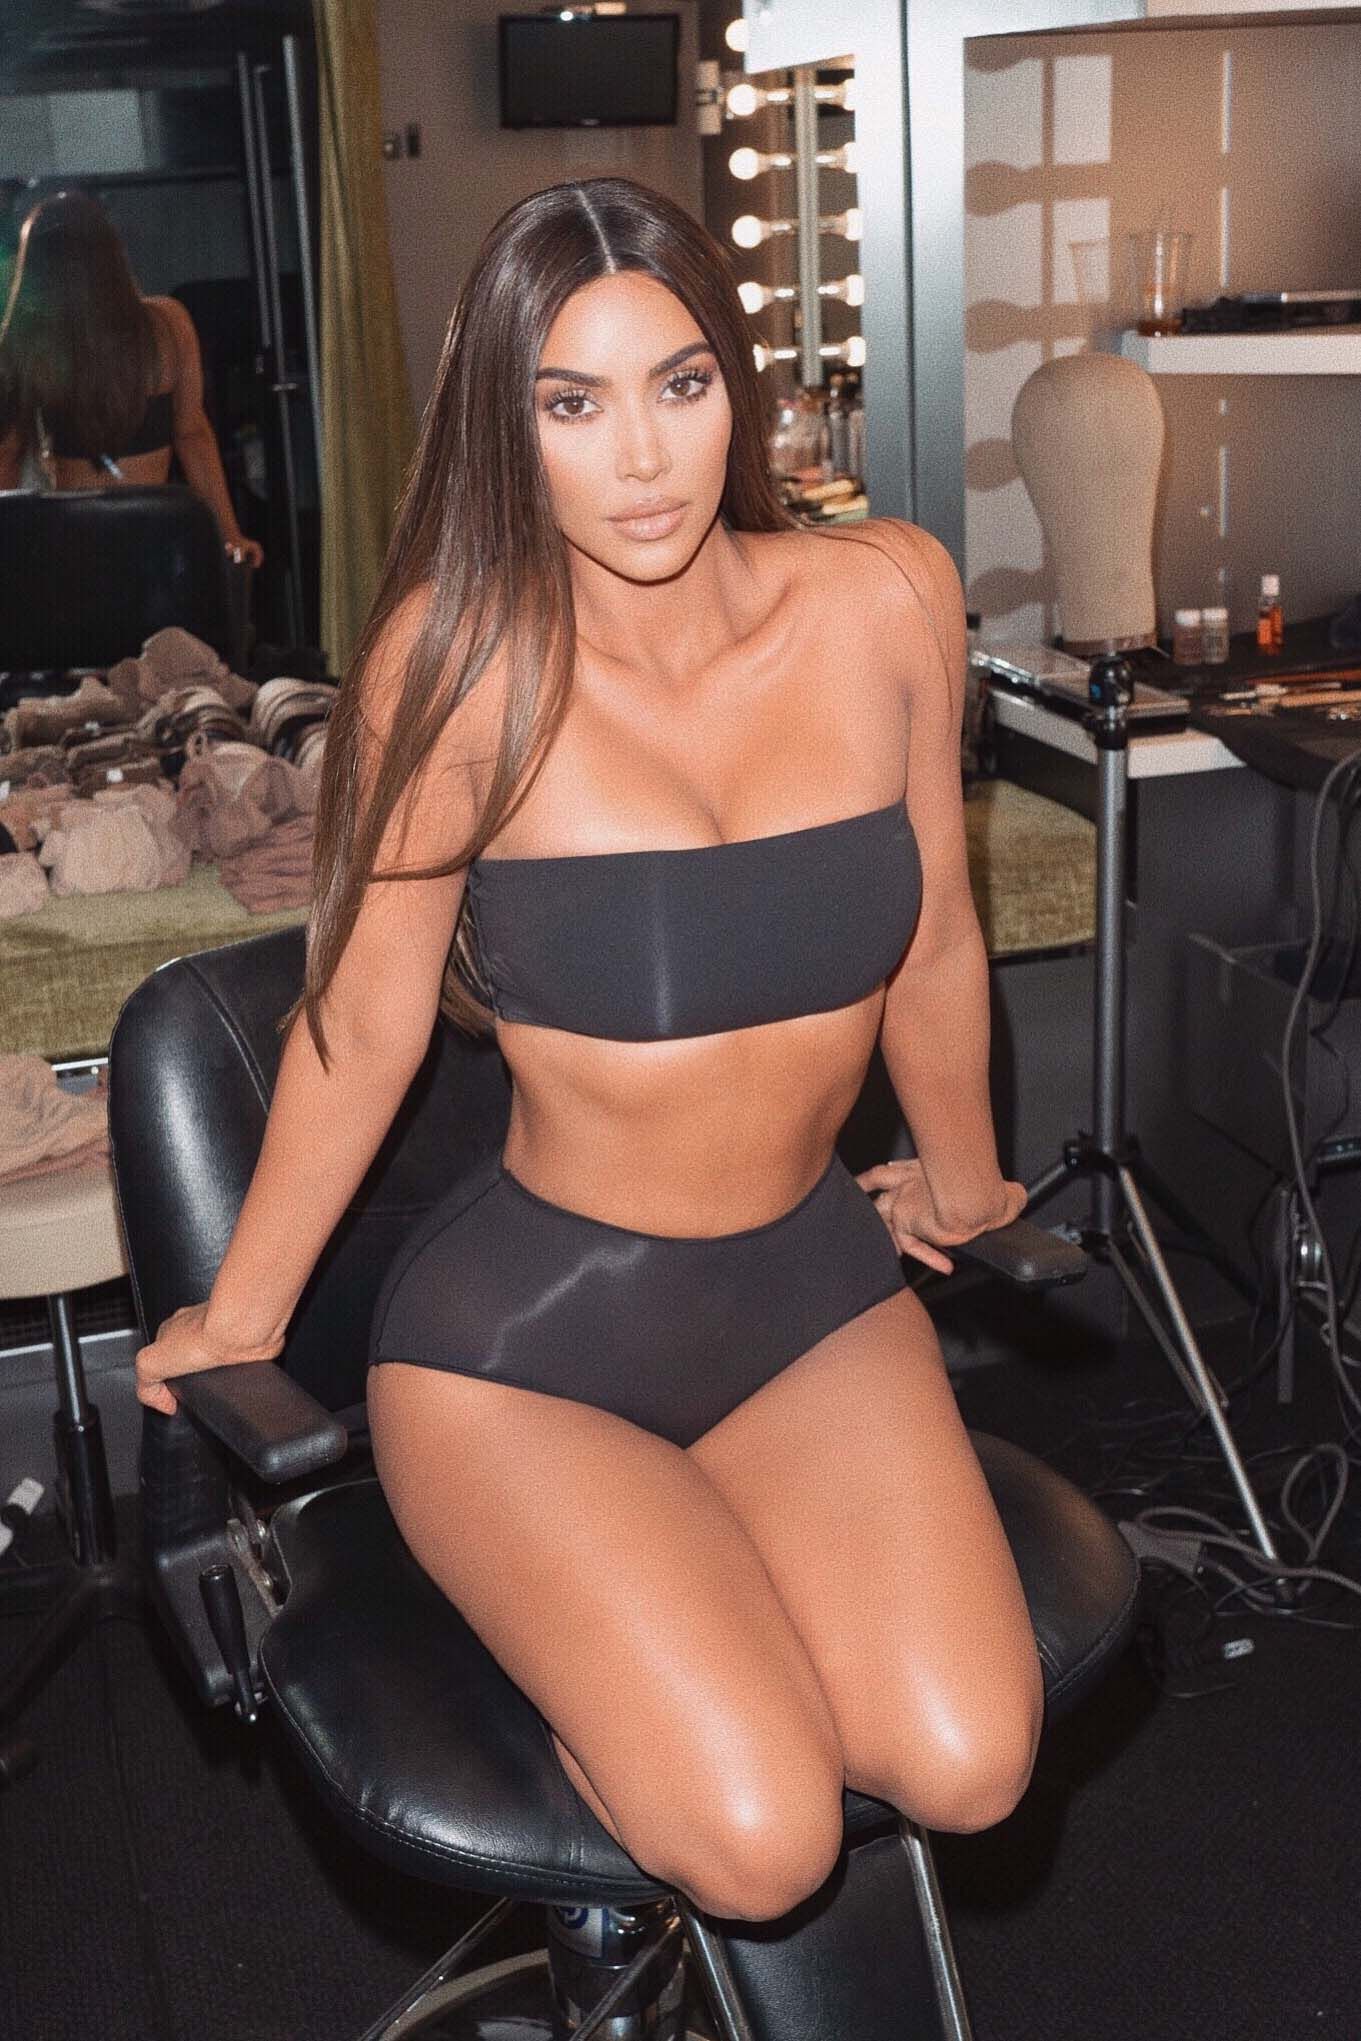 I reluctantly tried Kim Kardashian West's underwear label and